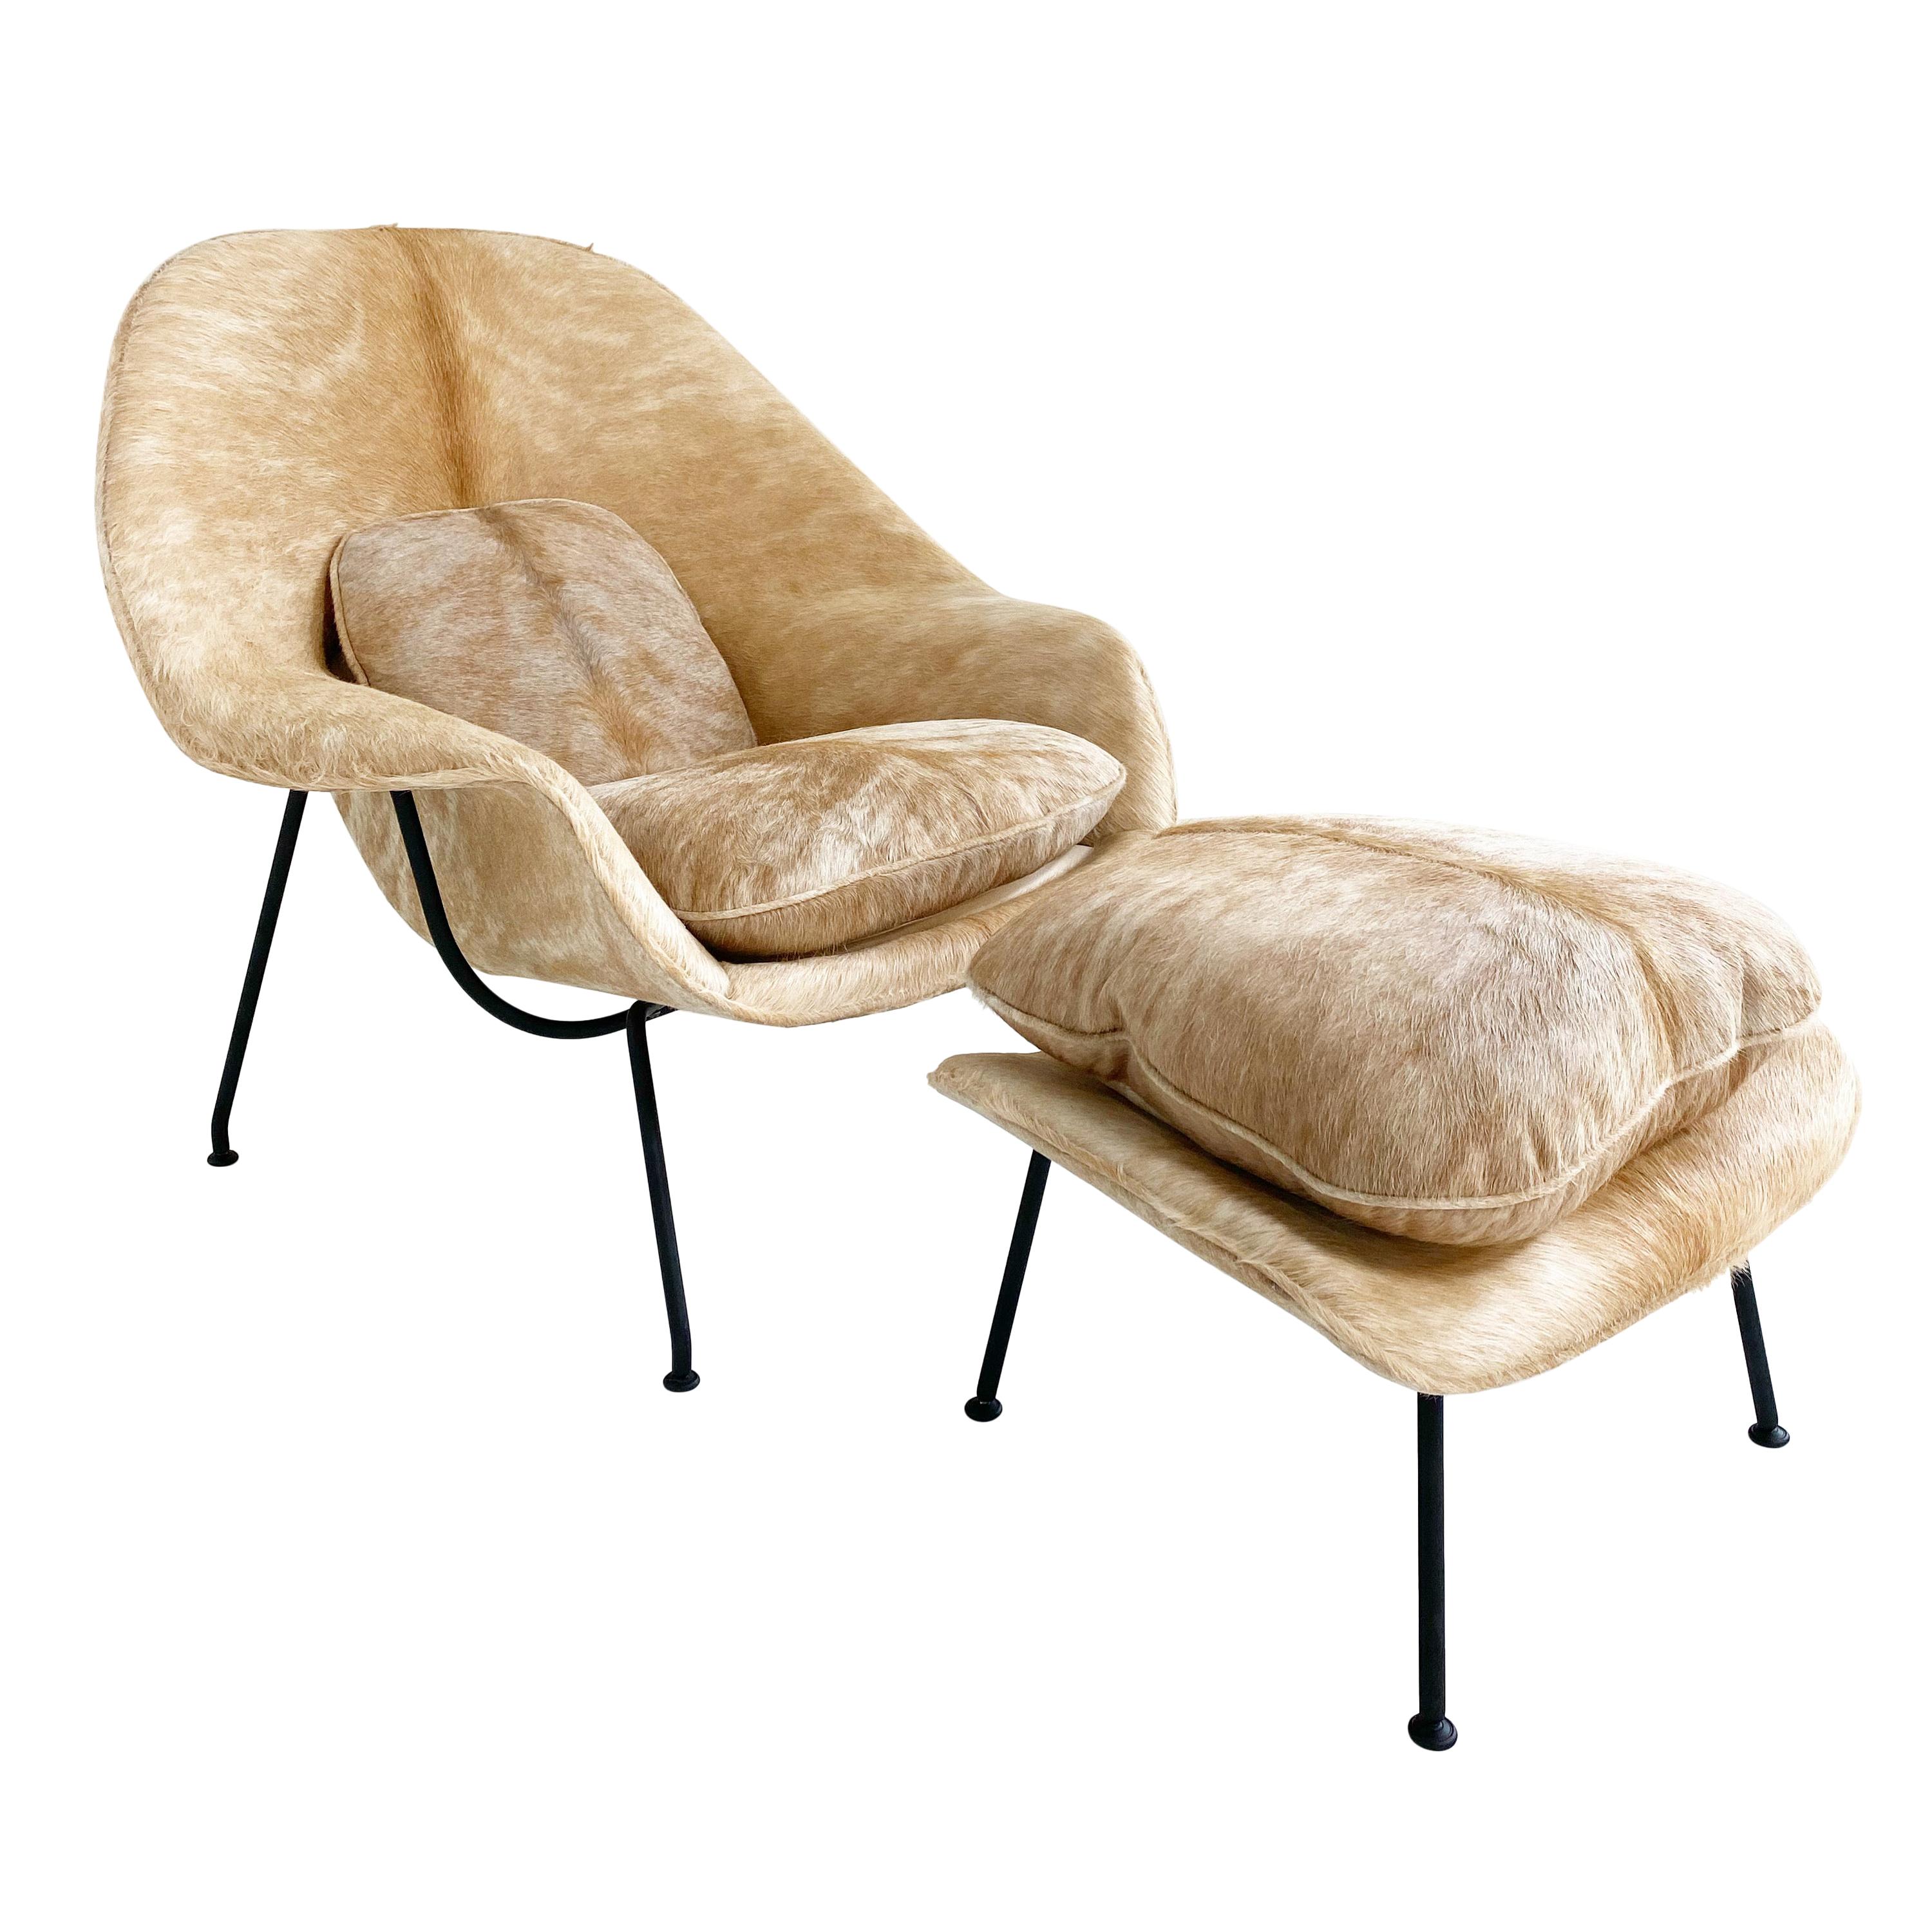 One-of-a-Kind Eero Saarinen Womb Chair and Ottoman Restored in Brazilian Cowhide